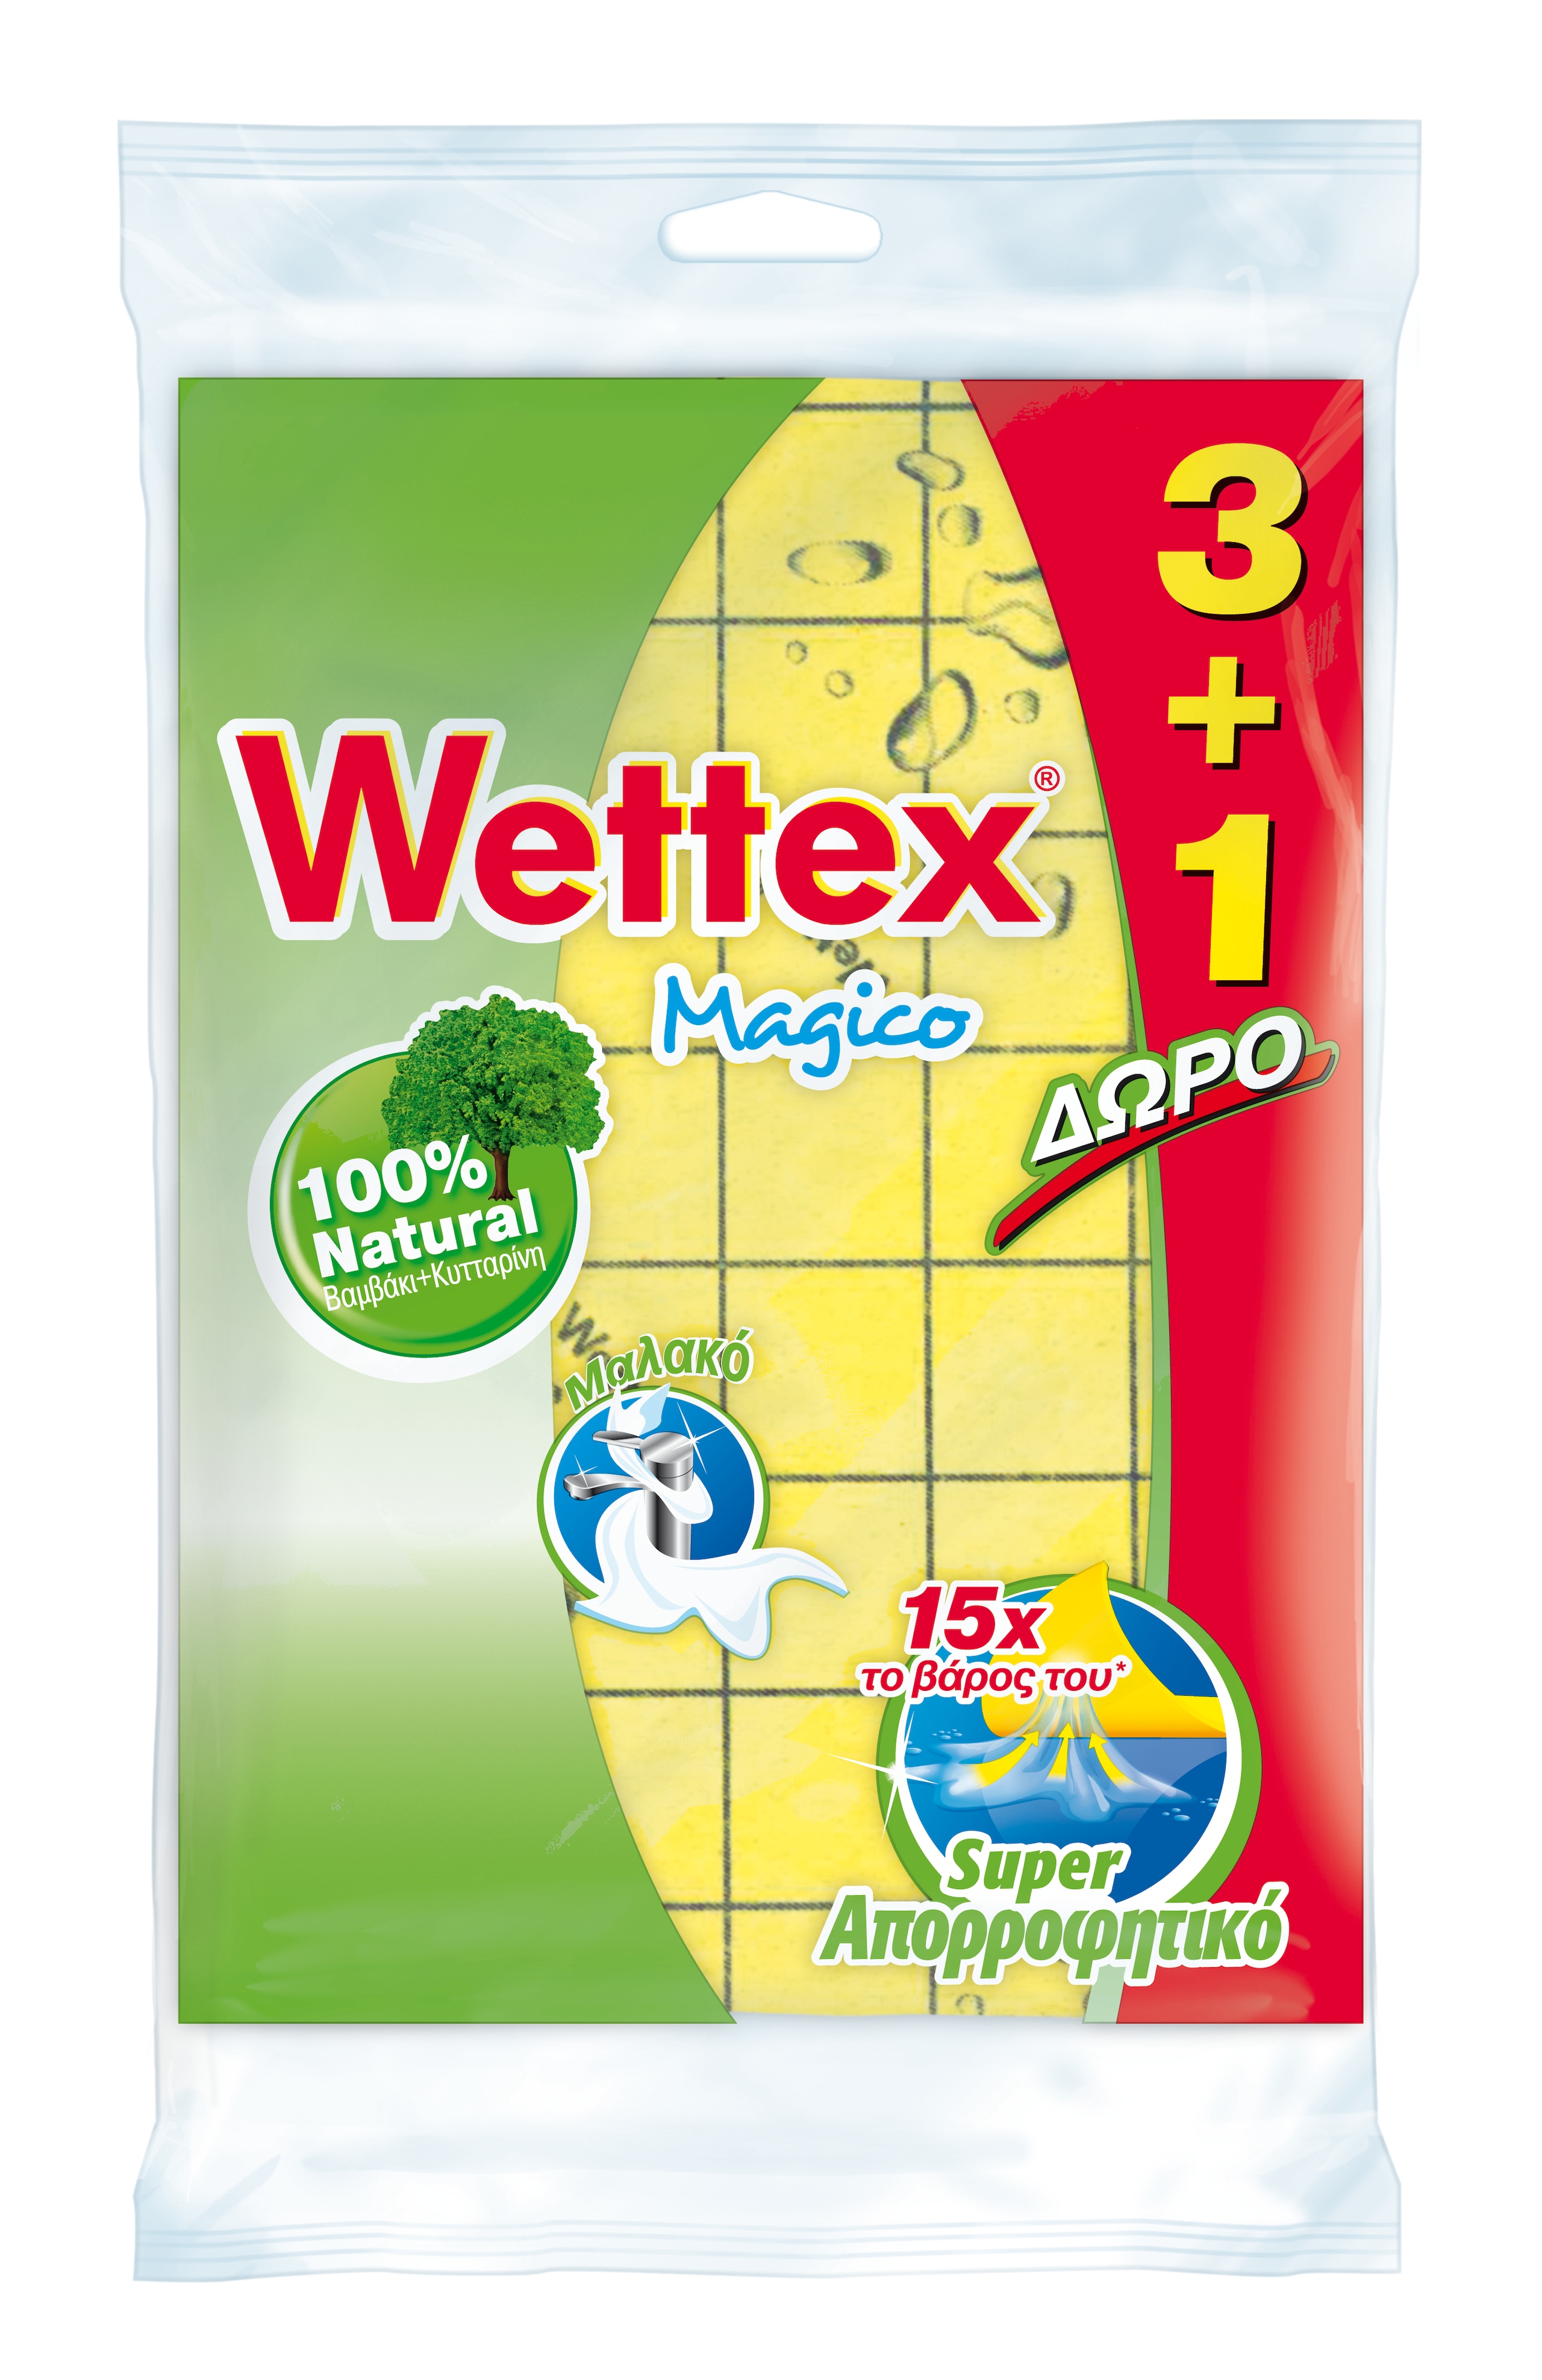 166966 WettexSoftMagico3+1 - Copy.jpg